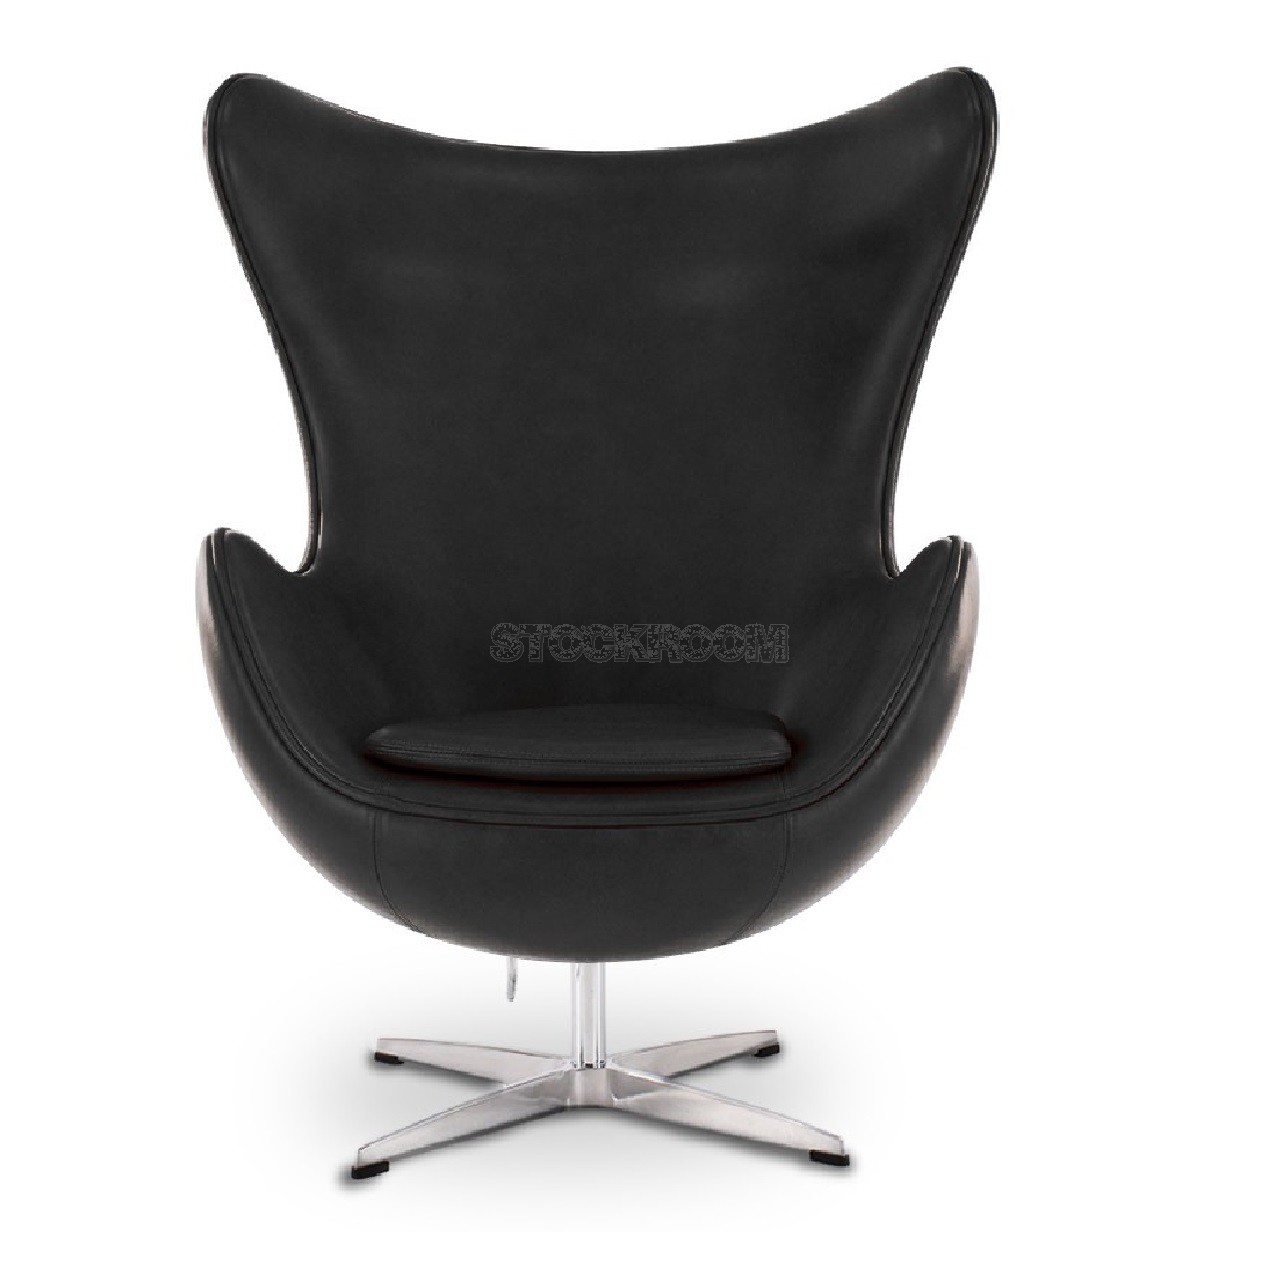 Arne Jacobsen Style Egg Chair - Leather